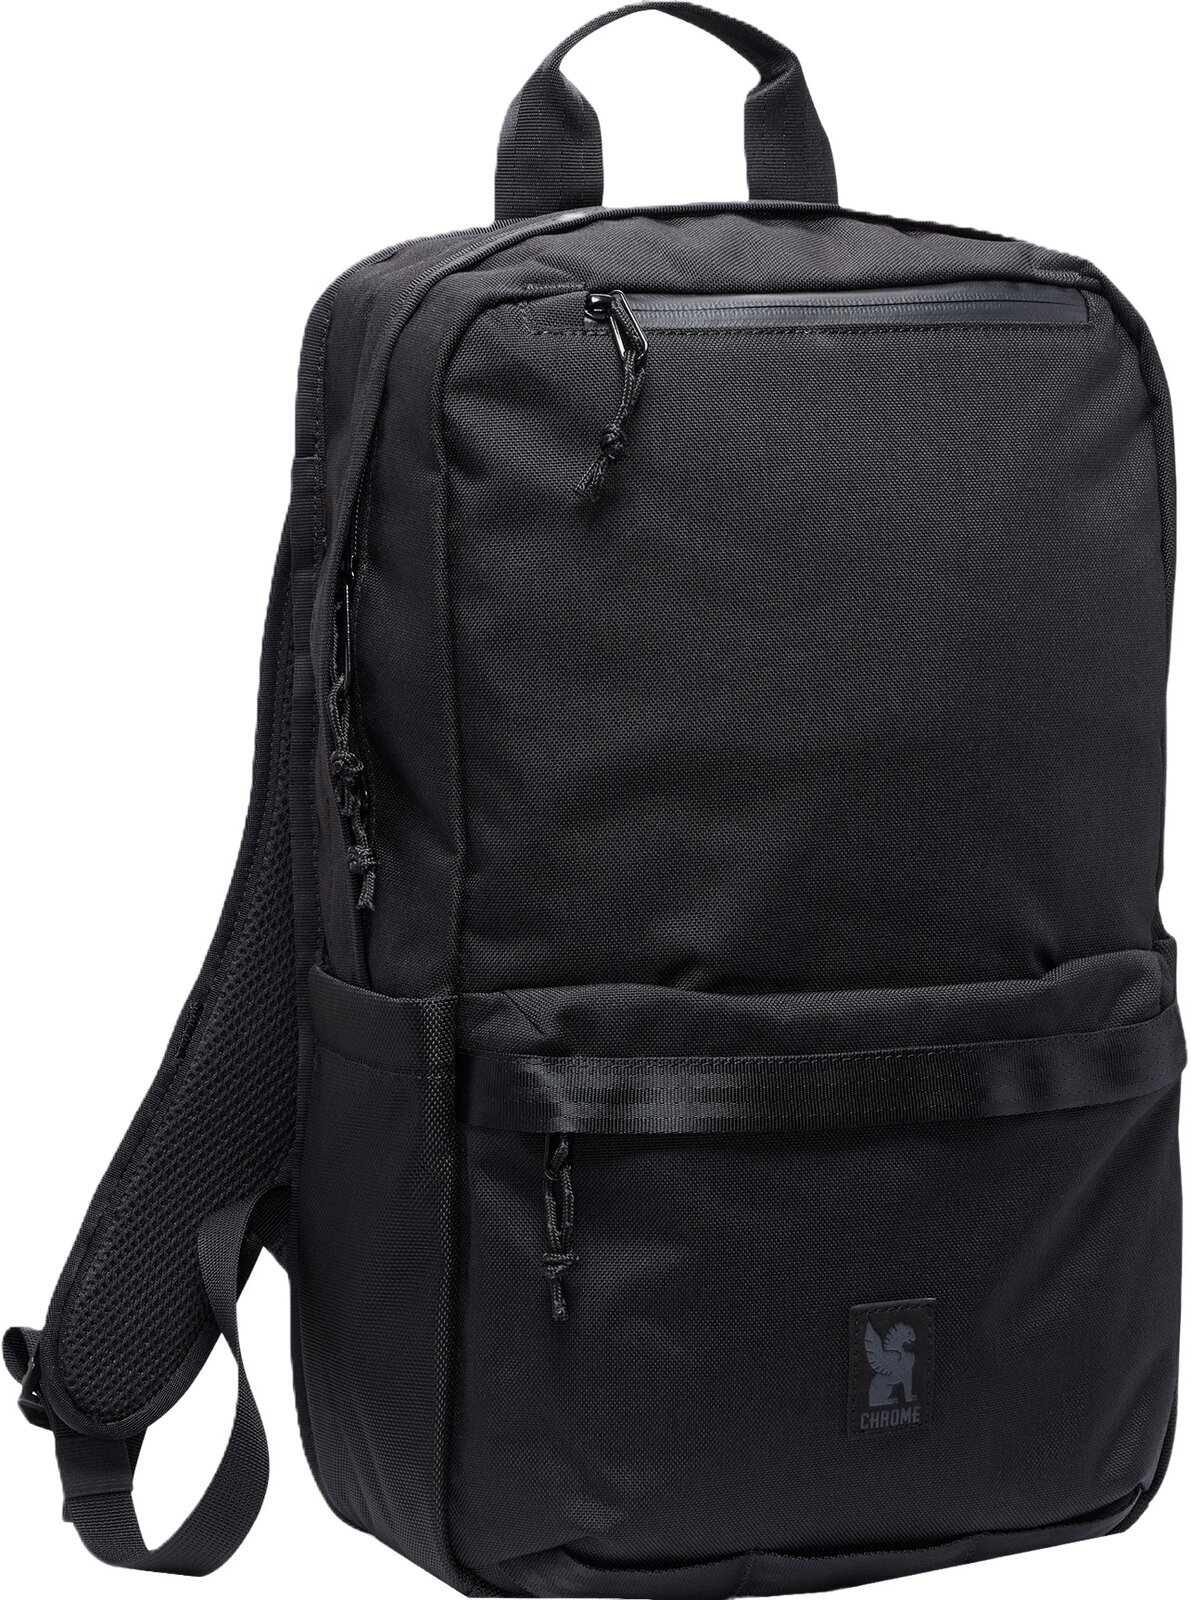 Lifestyle Backpack / Bag Chrome Hondo Backpack Black 18 L Backpack